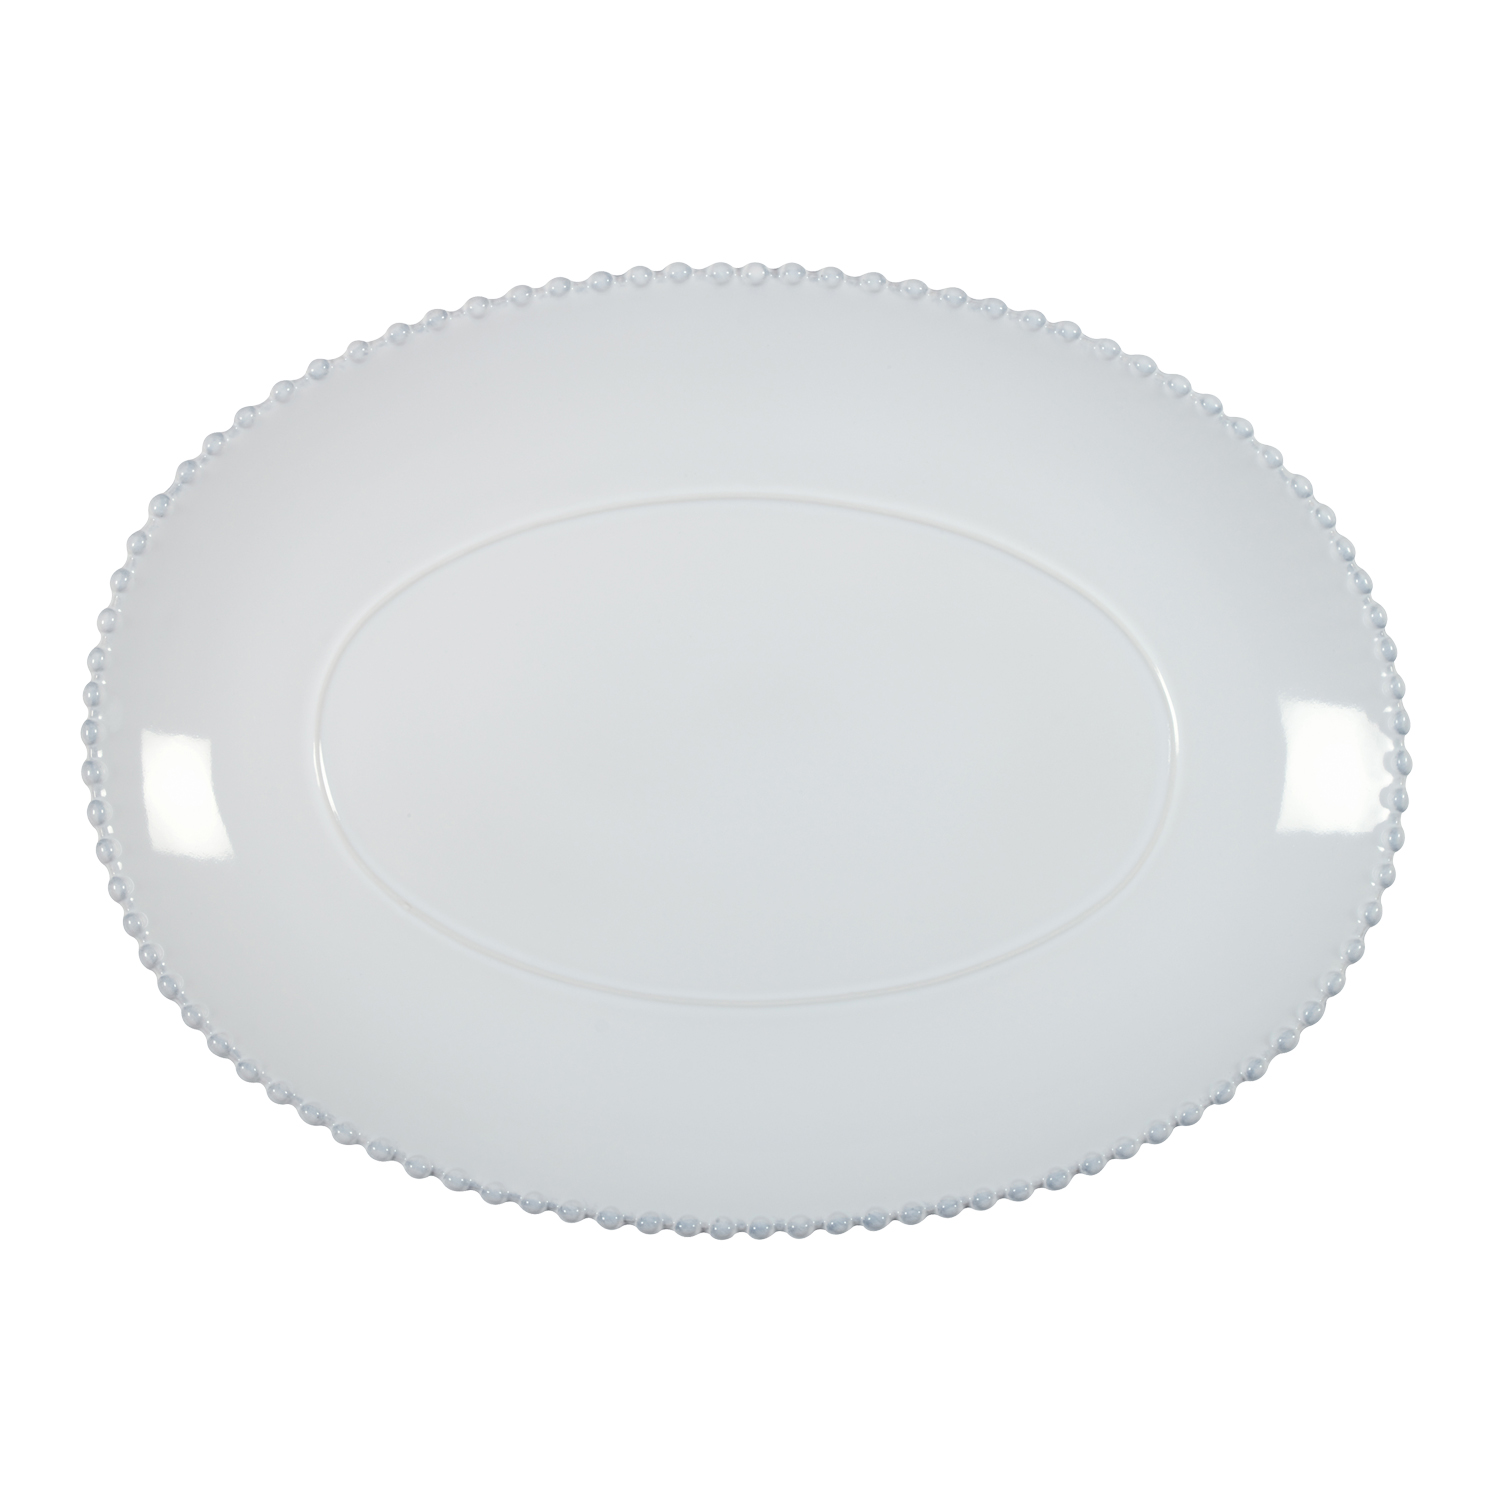 Pearl White Oval Platter Large 40cm Gift